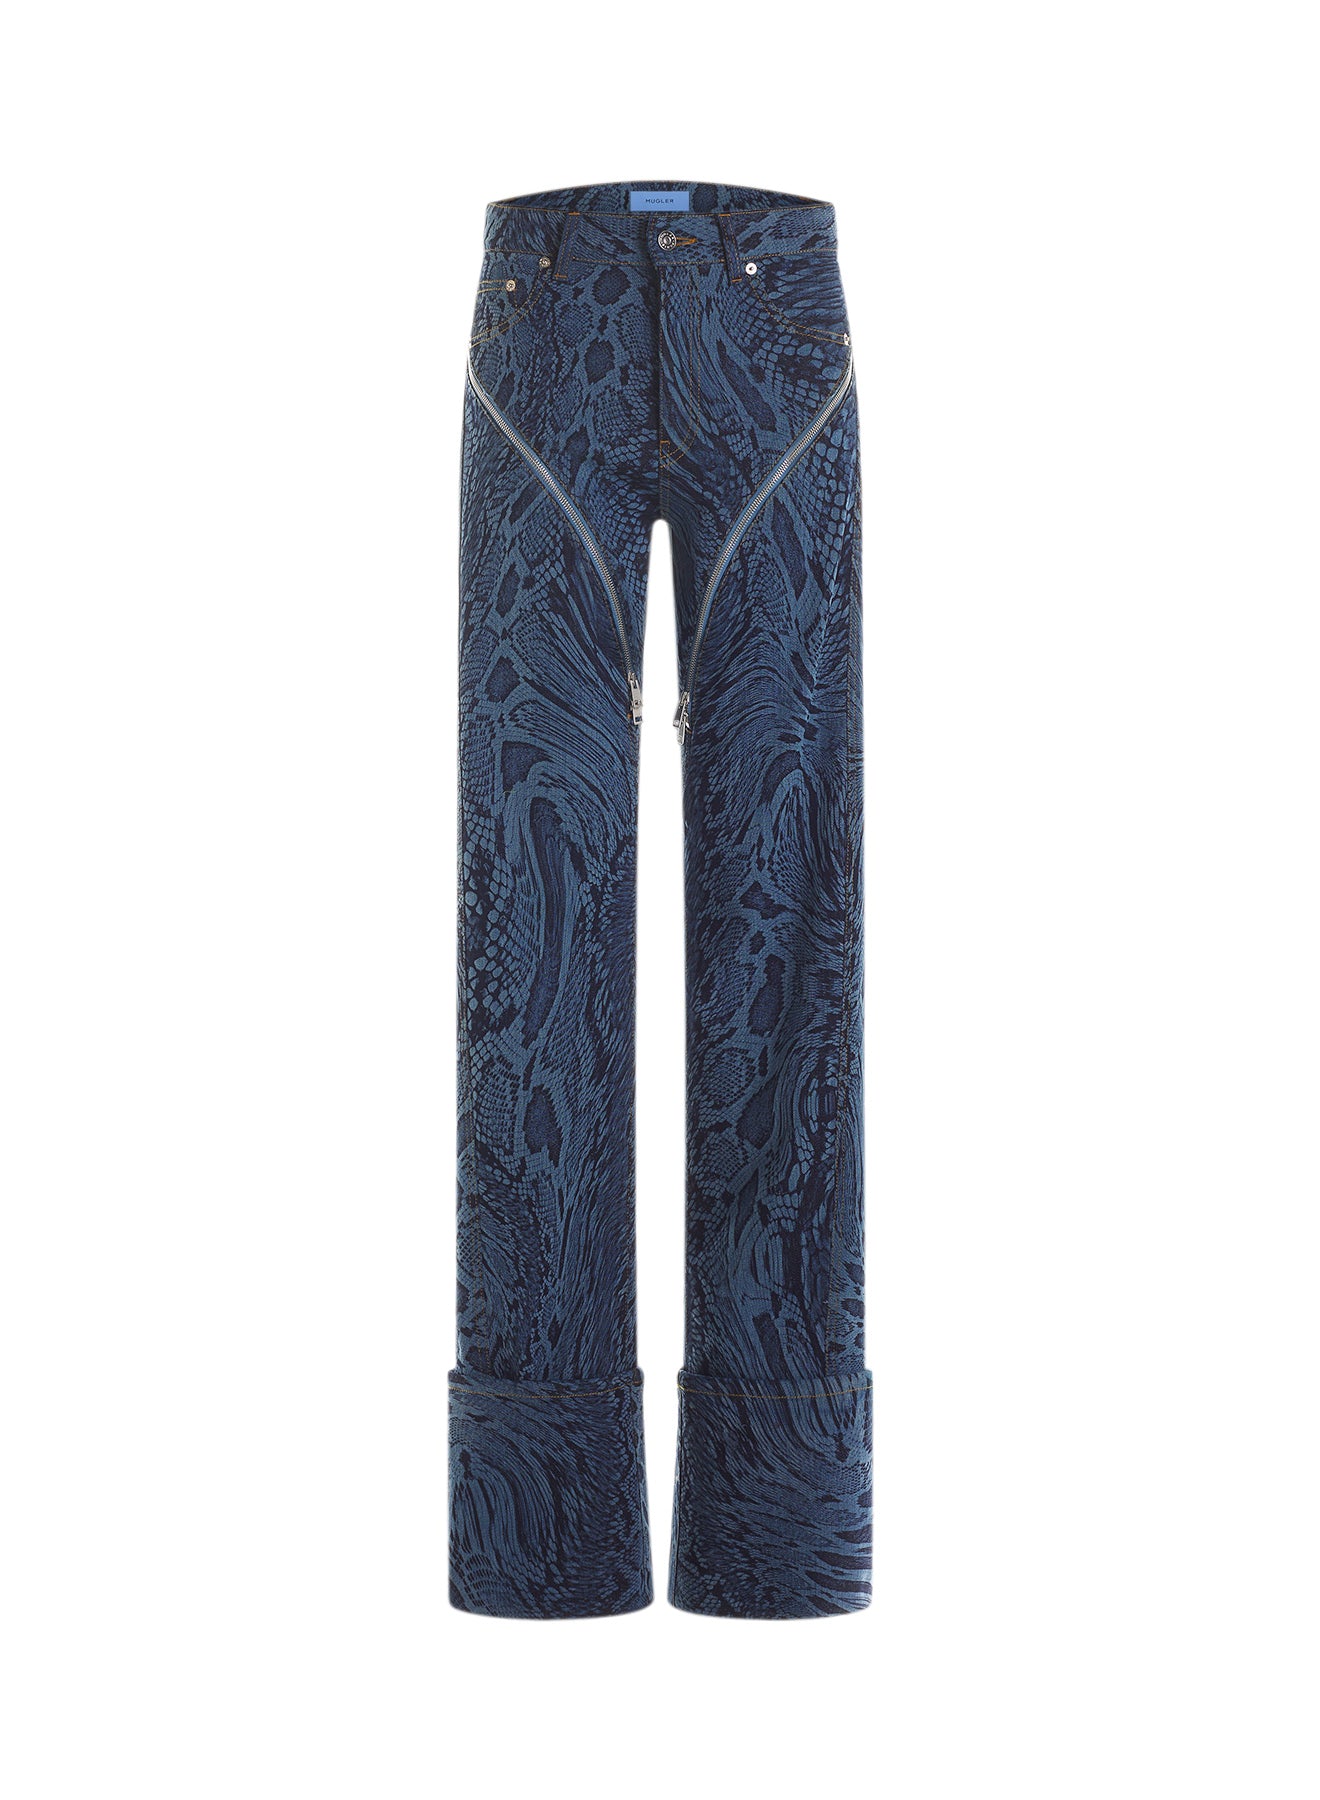 blue cuffed snake printed zipper jeans